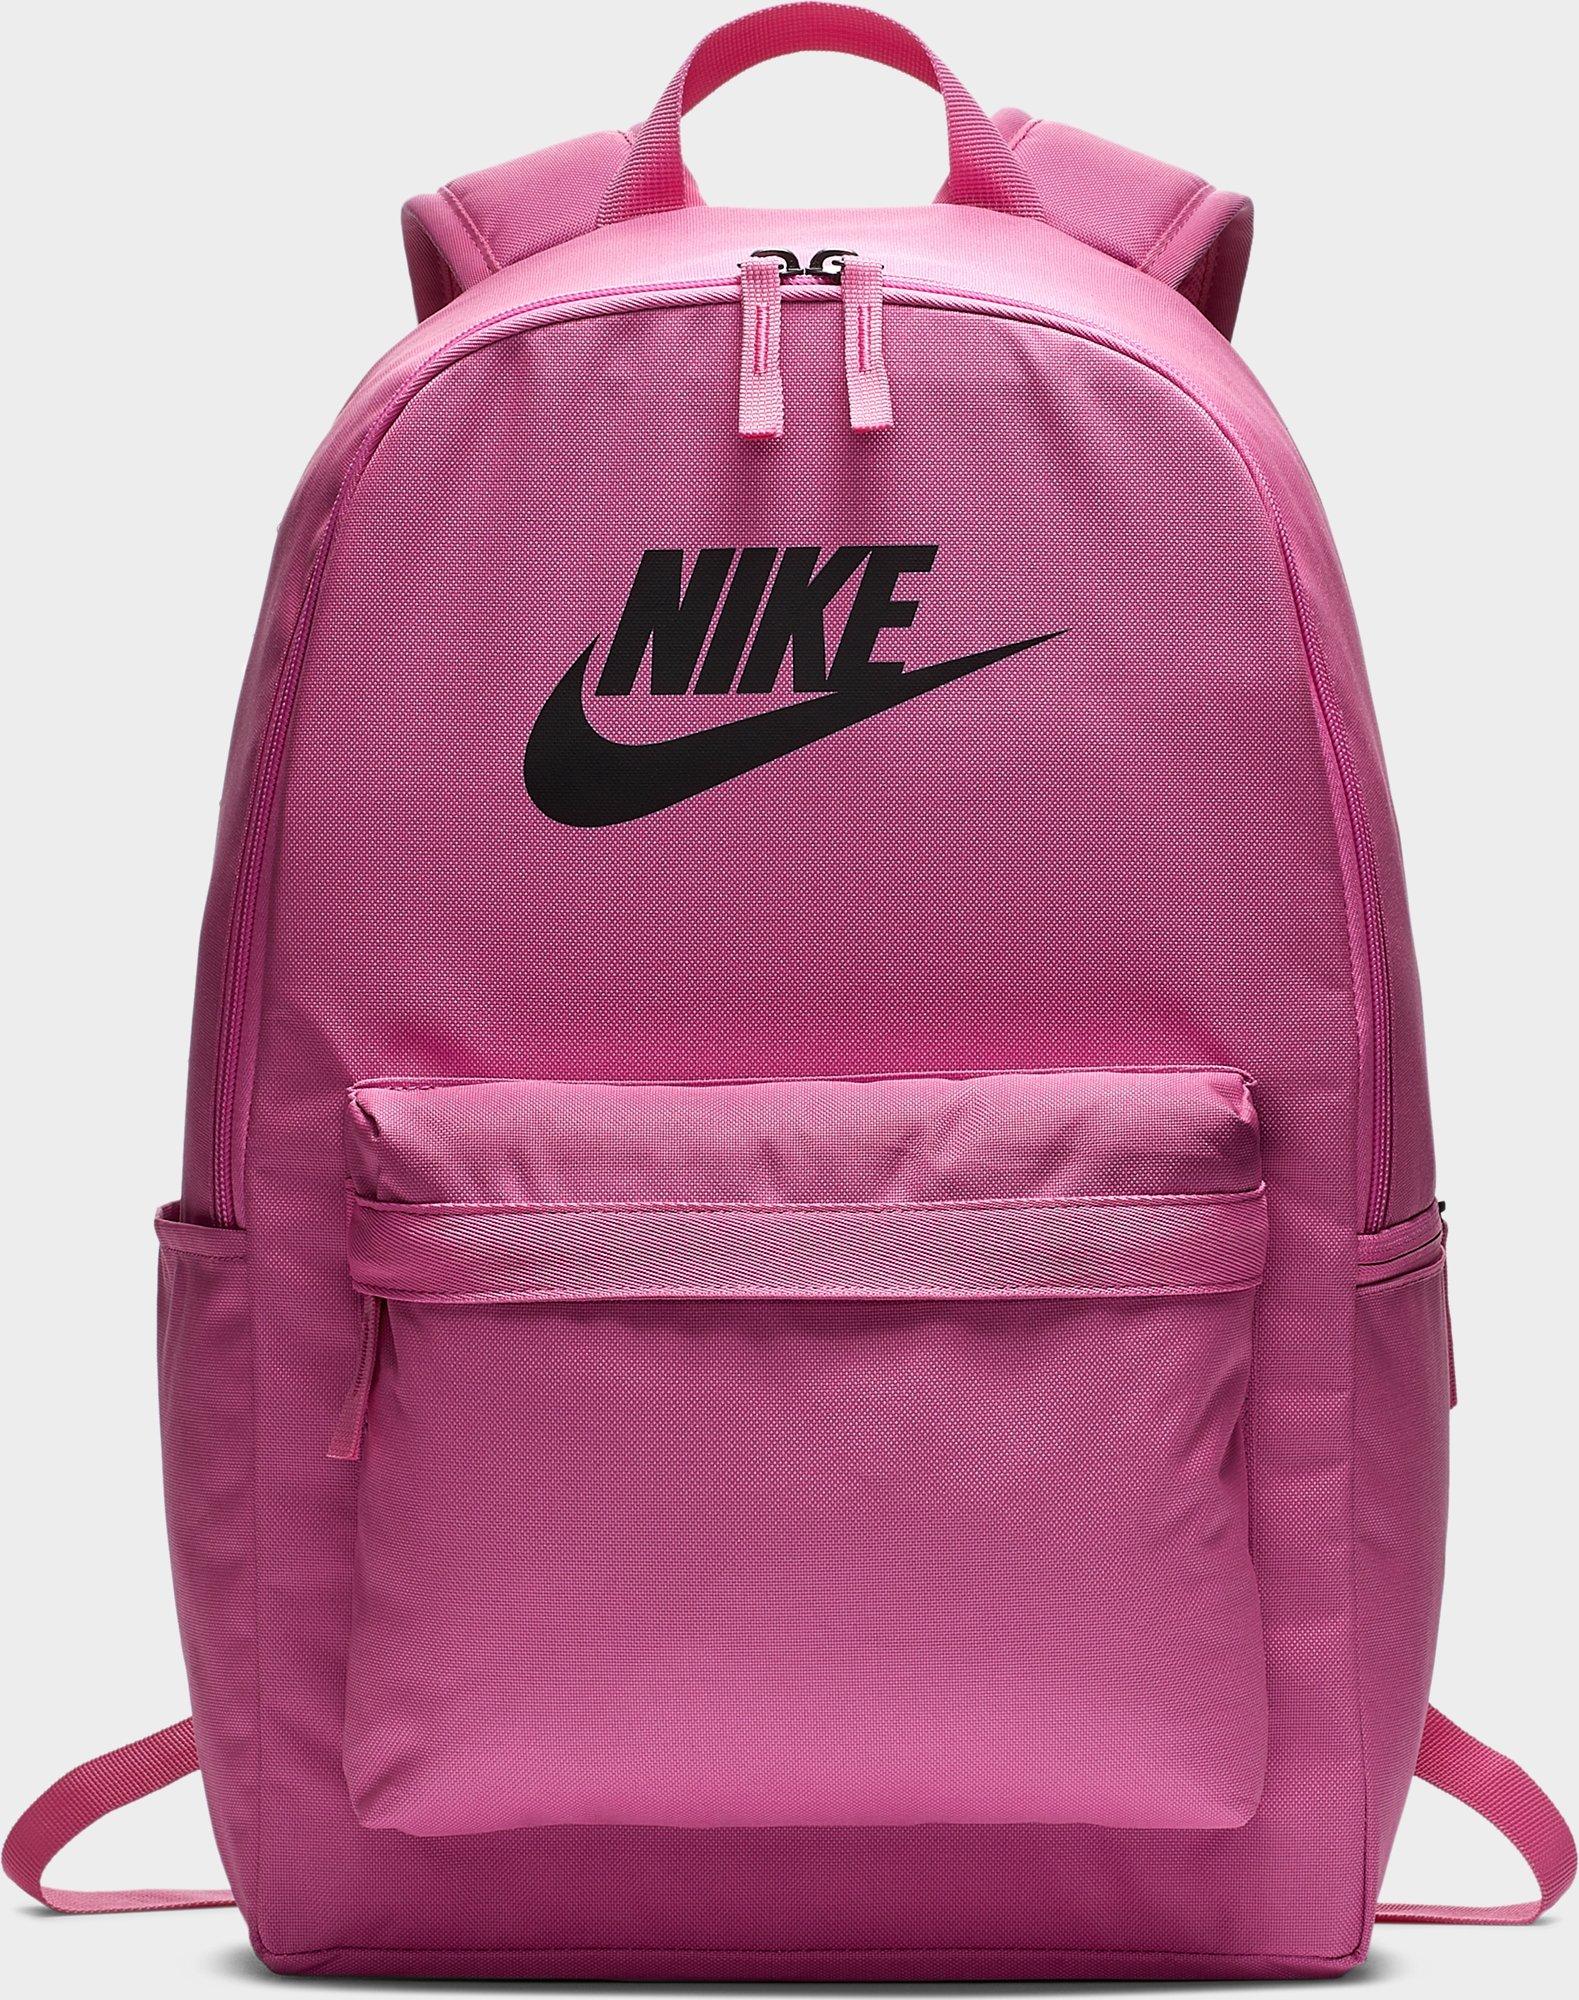 nike black and pink backpack